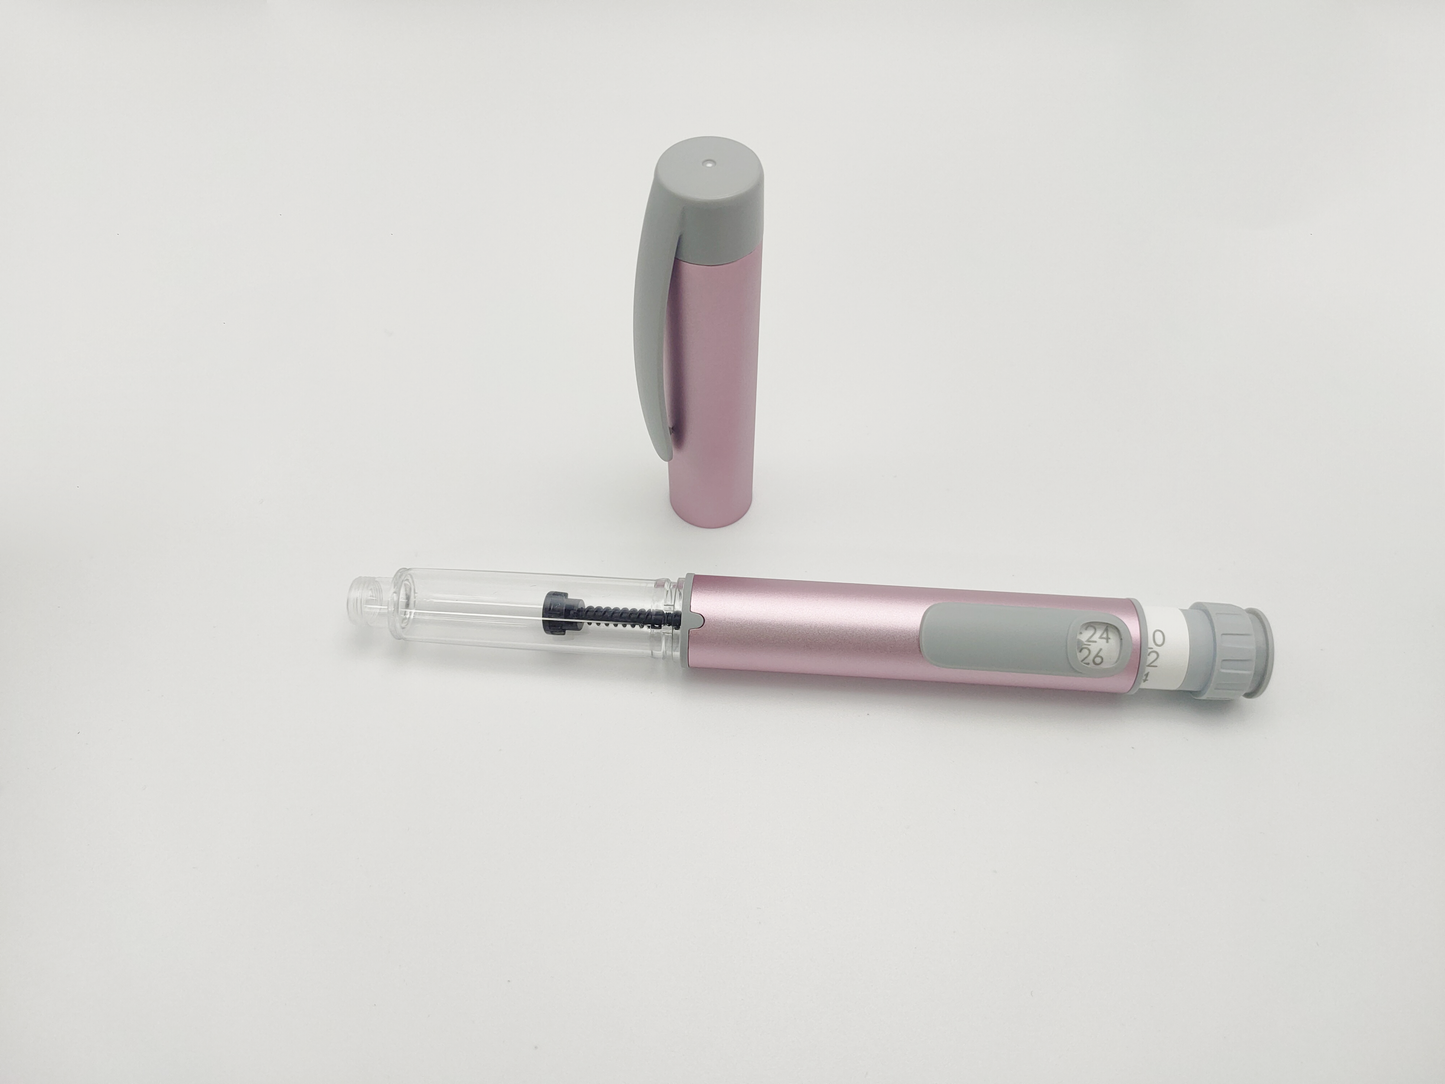 Metal insulin pen for diabetes